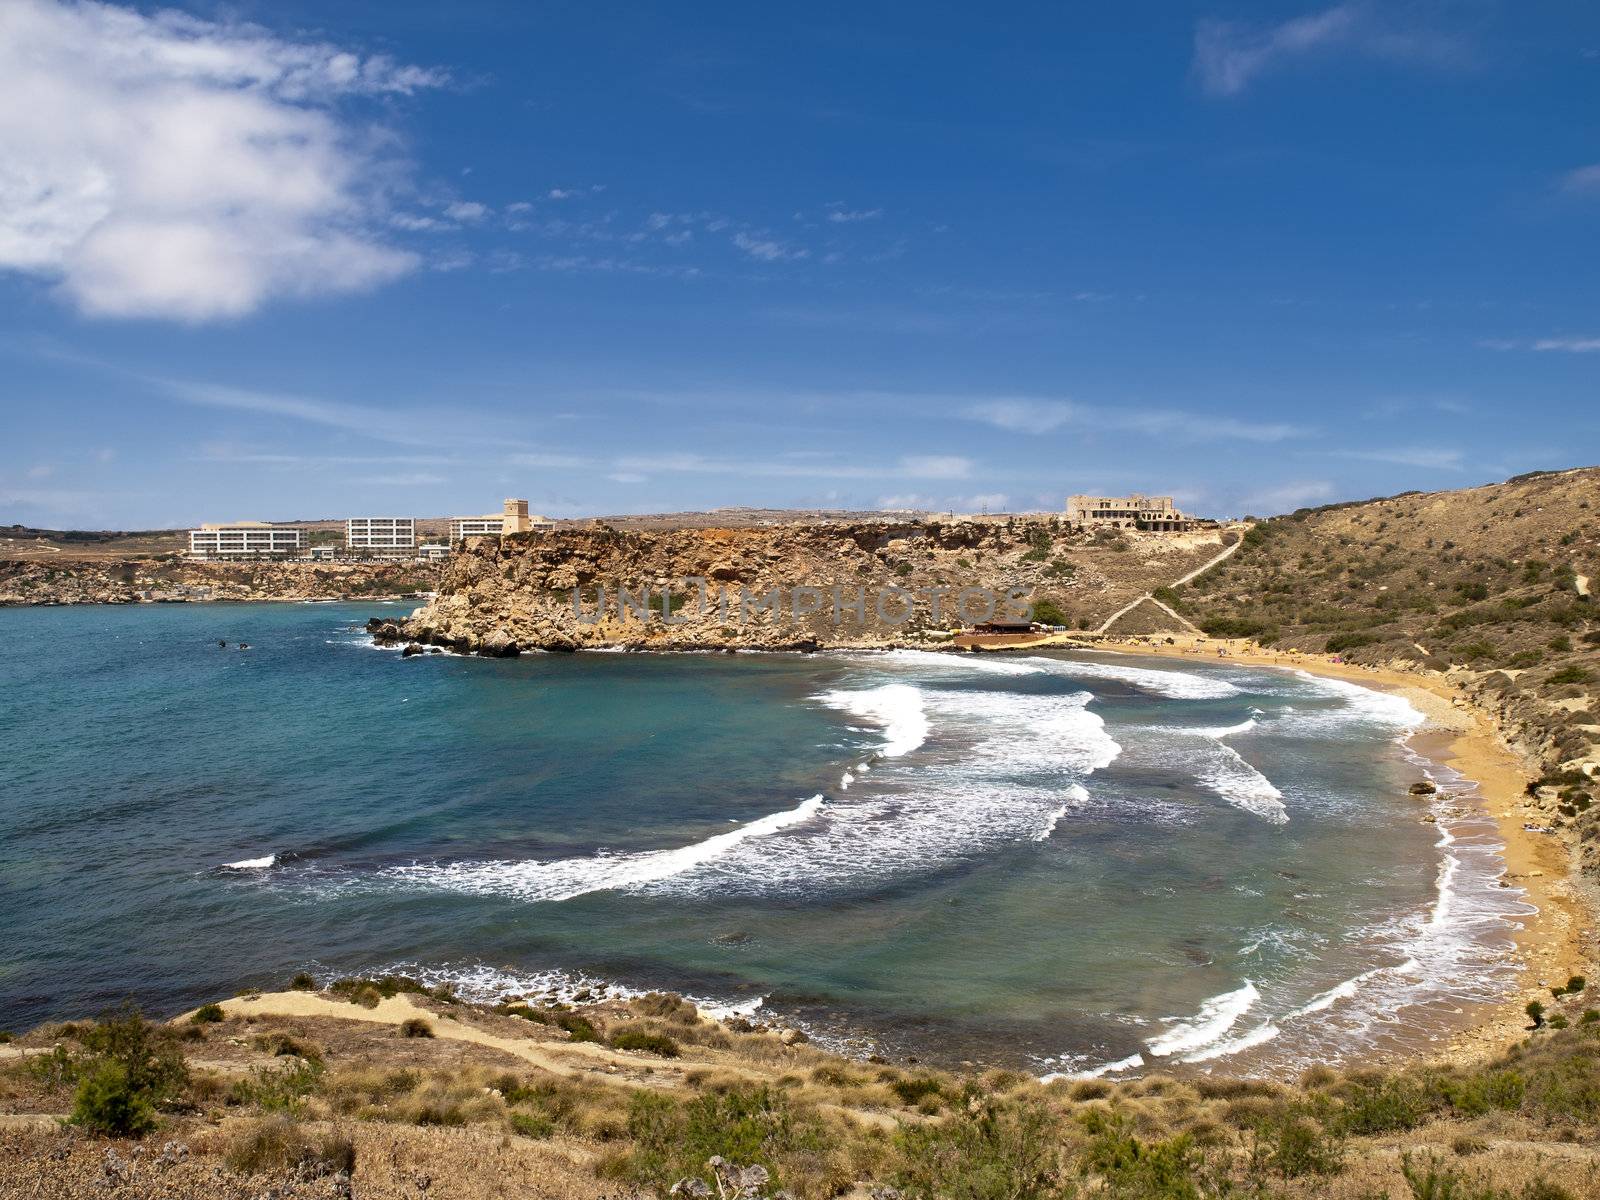 Ghajn Tuffieha Bay is one of the most beautiful and idyllic beaches on the island of Malta